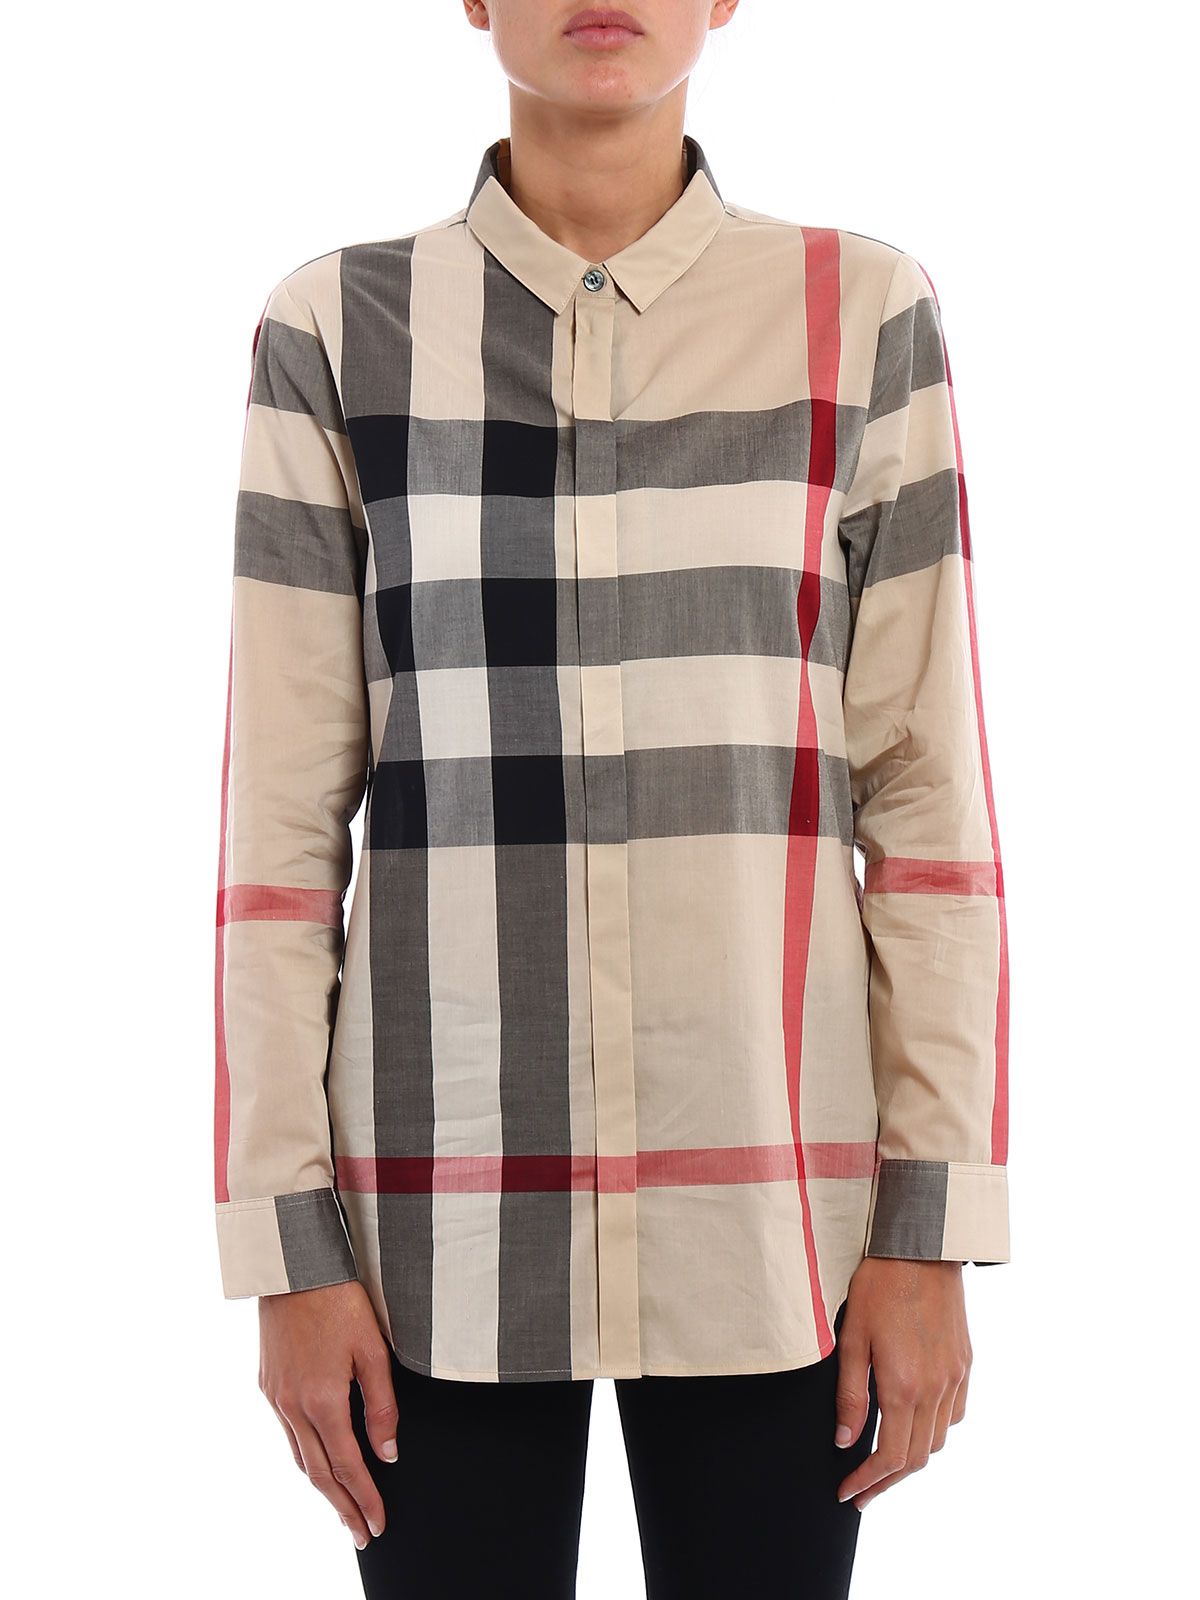 Shirts Burberry - New classic check shirt - 3994090 | Shop online at iKRIX